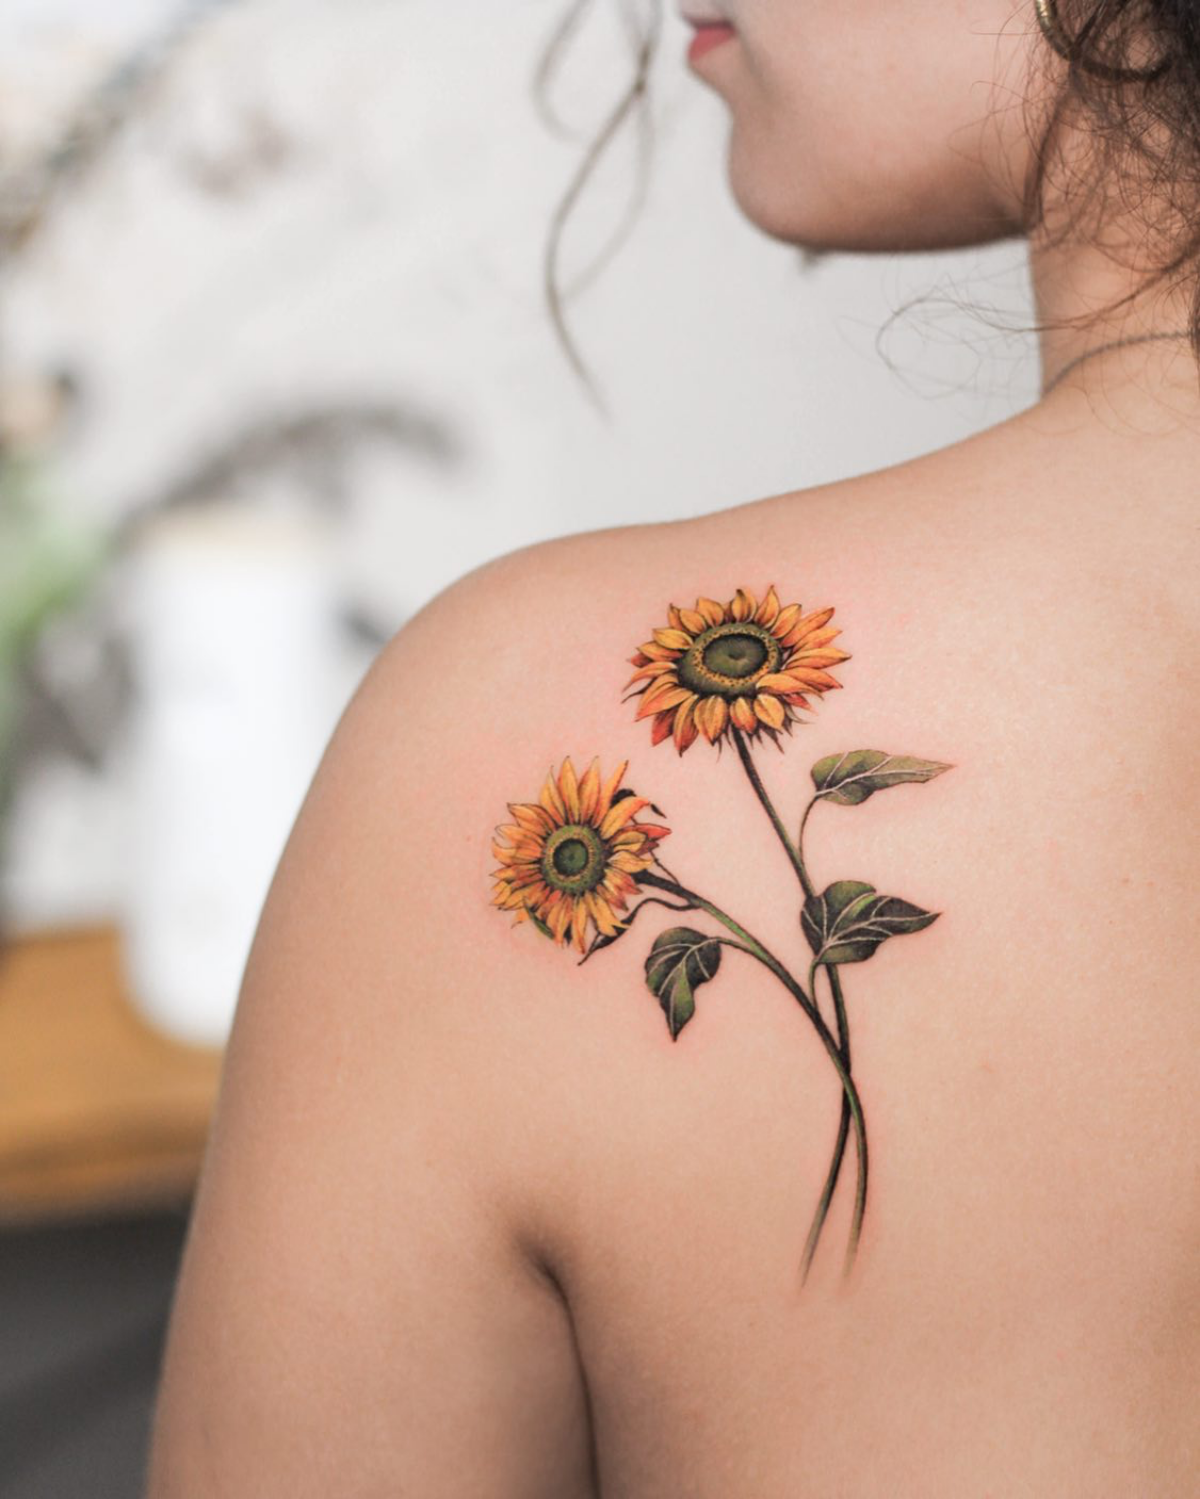 15 Beautiful Sunflower Tattoo Ideas That Evoke Pure Joy